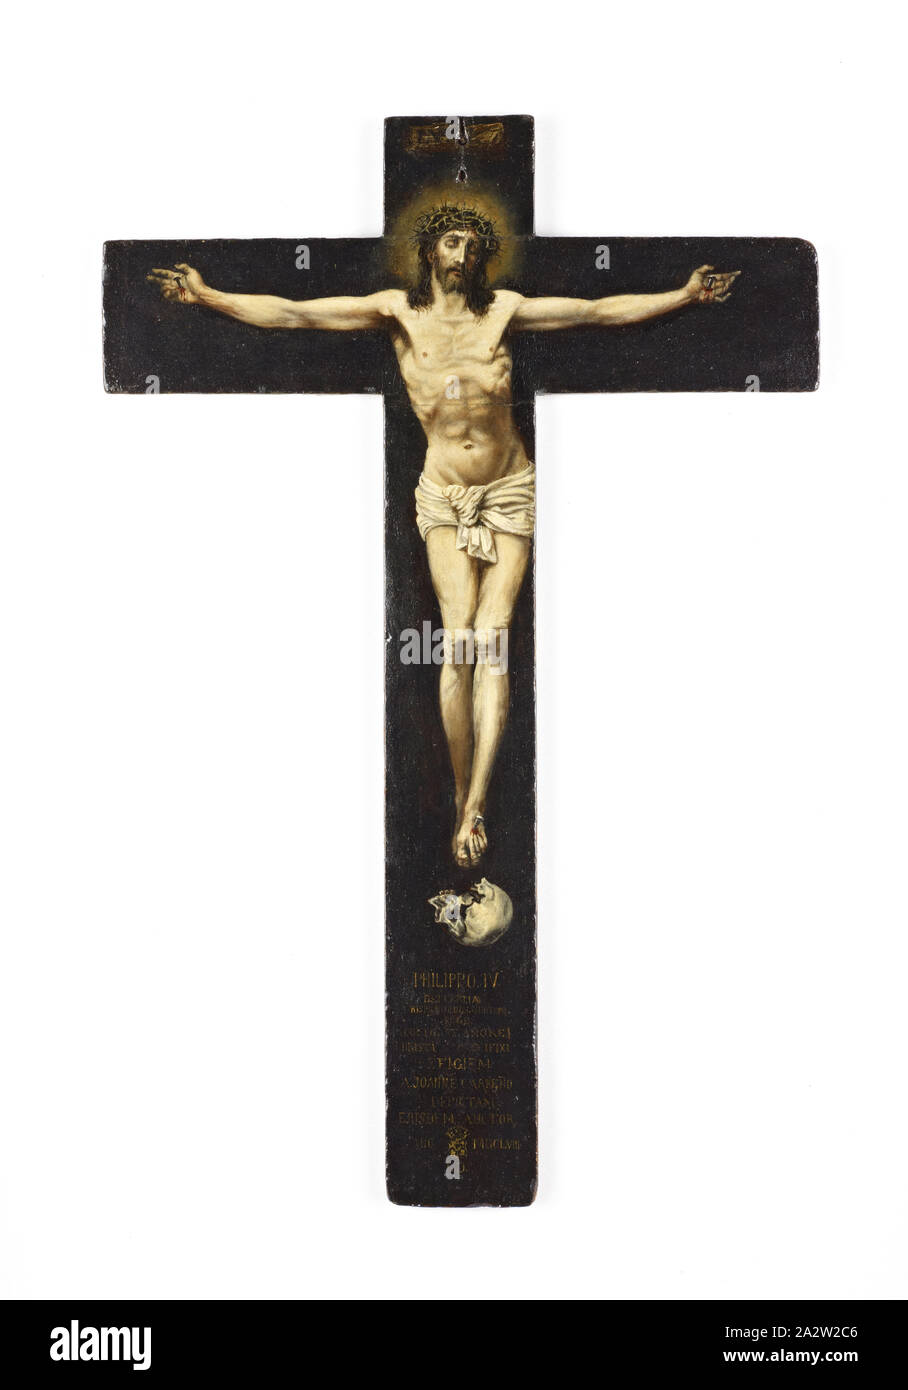 Crucifix, Juan Carreño de Miranda (Spanish, 1614-1685), 1658, oil on panel, 19 x 12-1/2 in., Inscribed at the bottom of the cross: PHILIPPO. IV., DEI, GRATIA., HISPANORUM. GENTIUM., REGE., CULTO. ET. AMOREI, CHRISTI CRUCIFIXI, EFIGIEM, A. JOANNE CARREÑO, DEPICTAM, EJUSDEM. AUCTOR, ANO MDCLVIII, L.D., European Painting and Sculpture Before 1800 Stock Photo